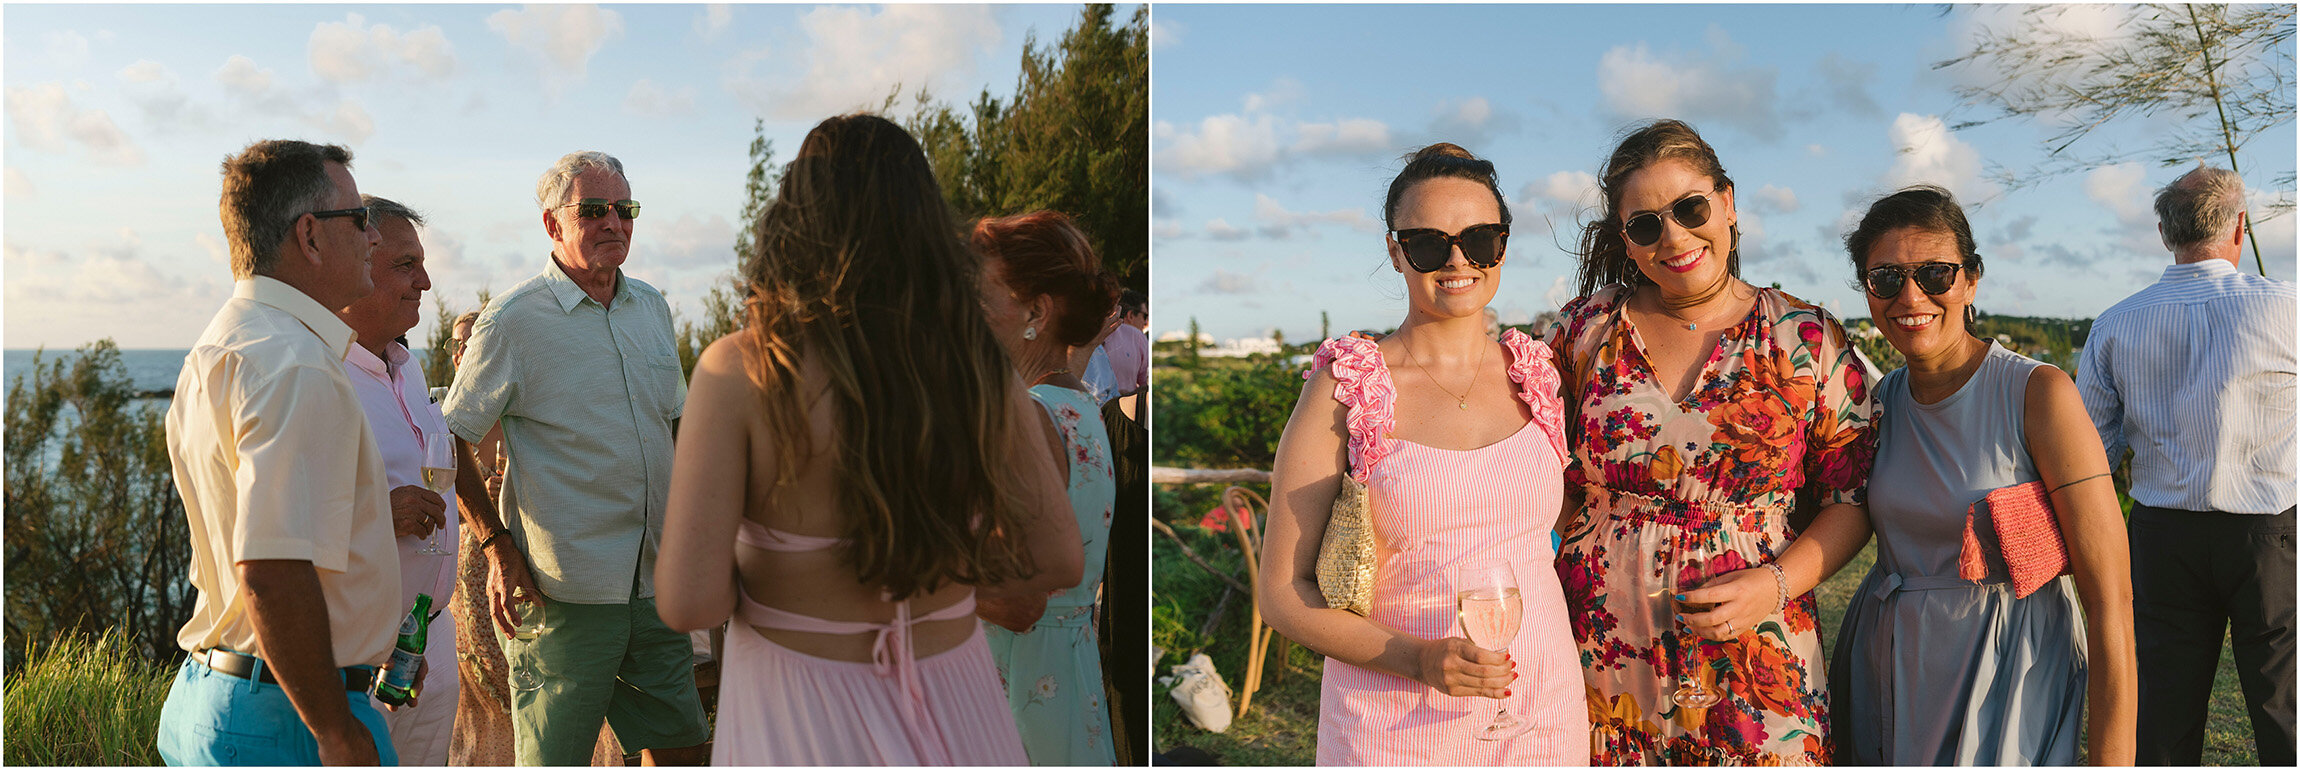 ©FianderFoto_Bermuda Same Sex Wedding Photographer_W&J_074.jpg